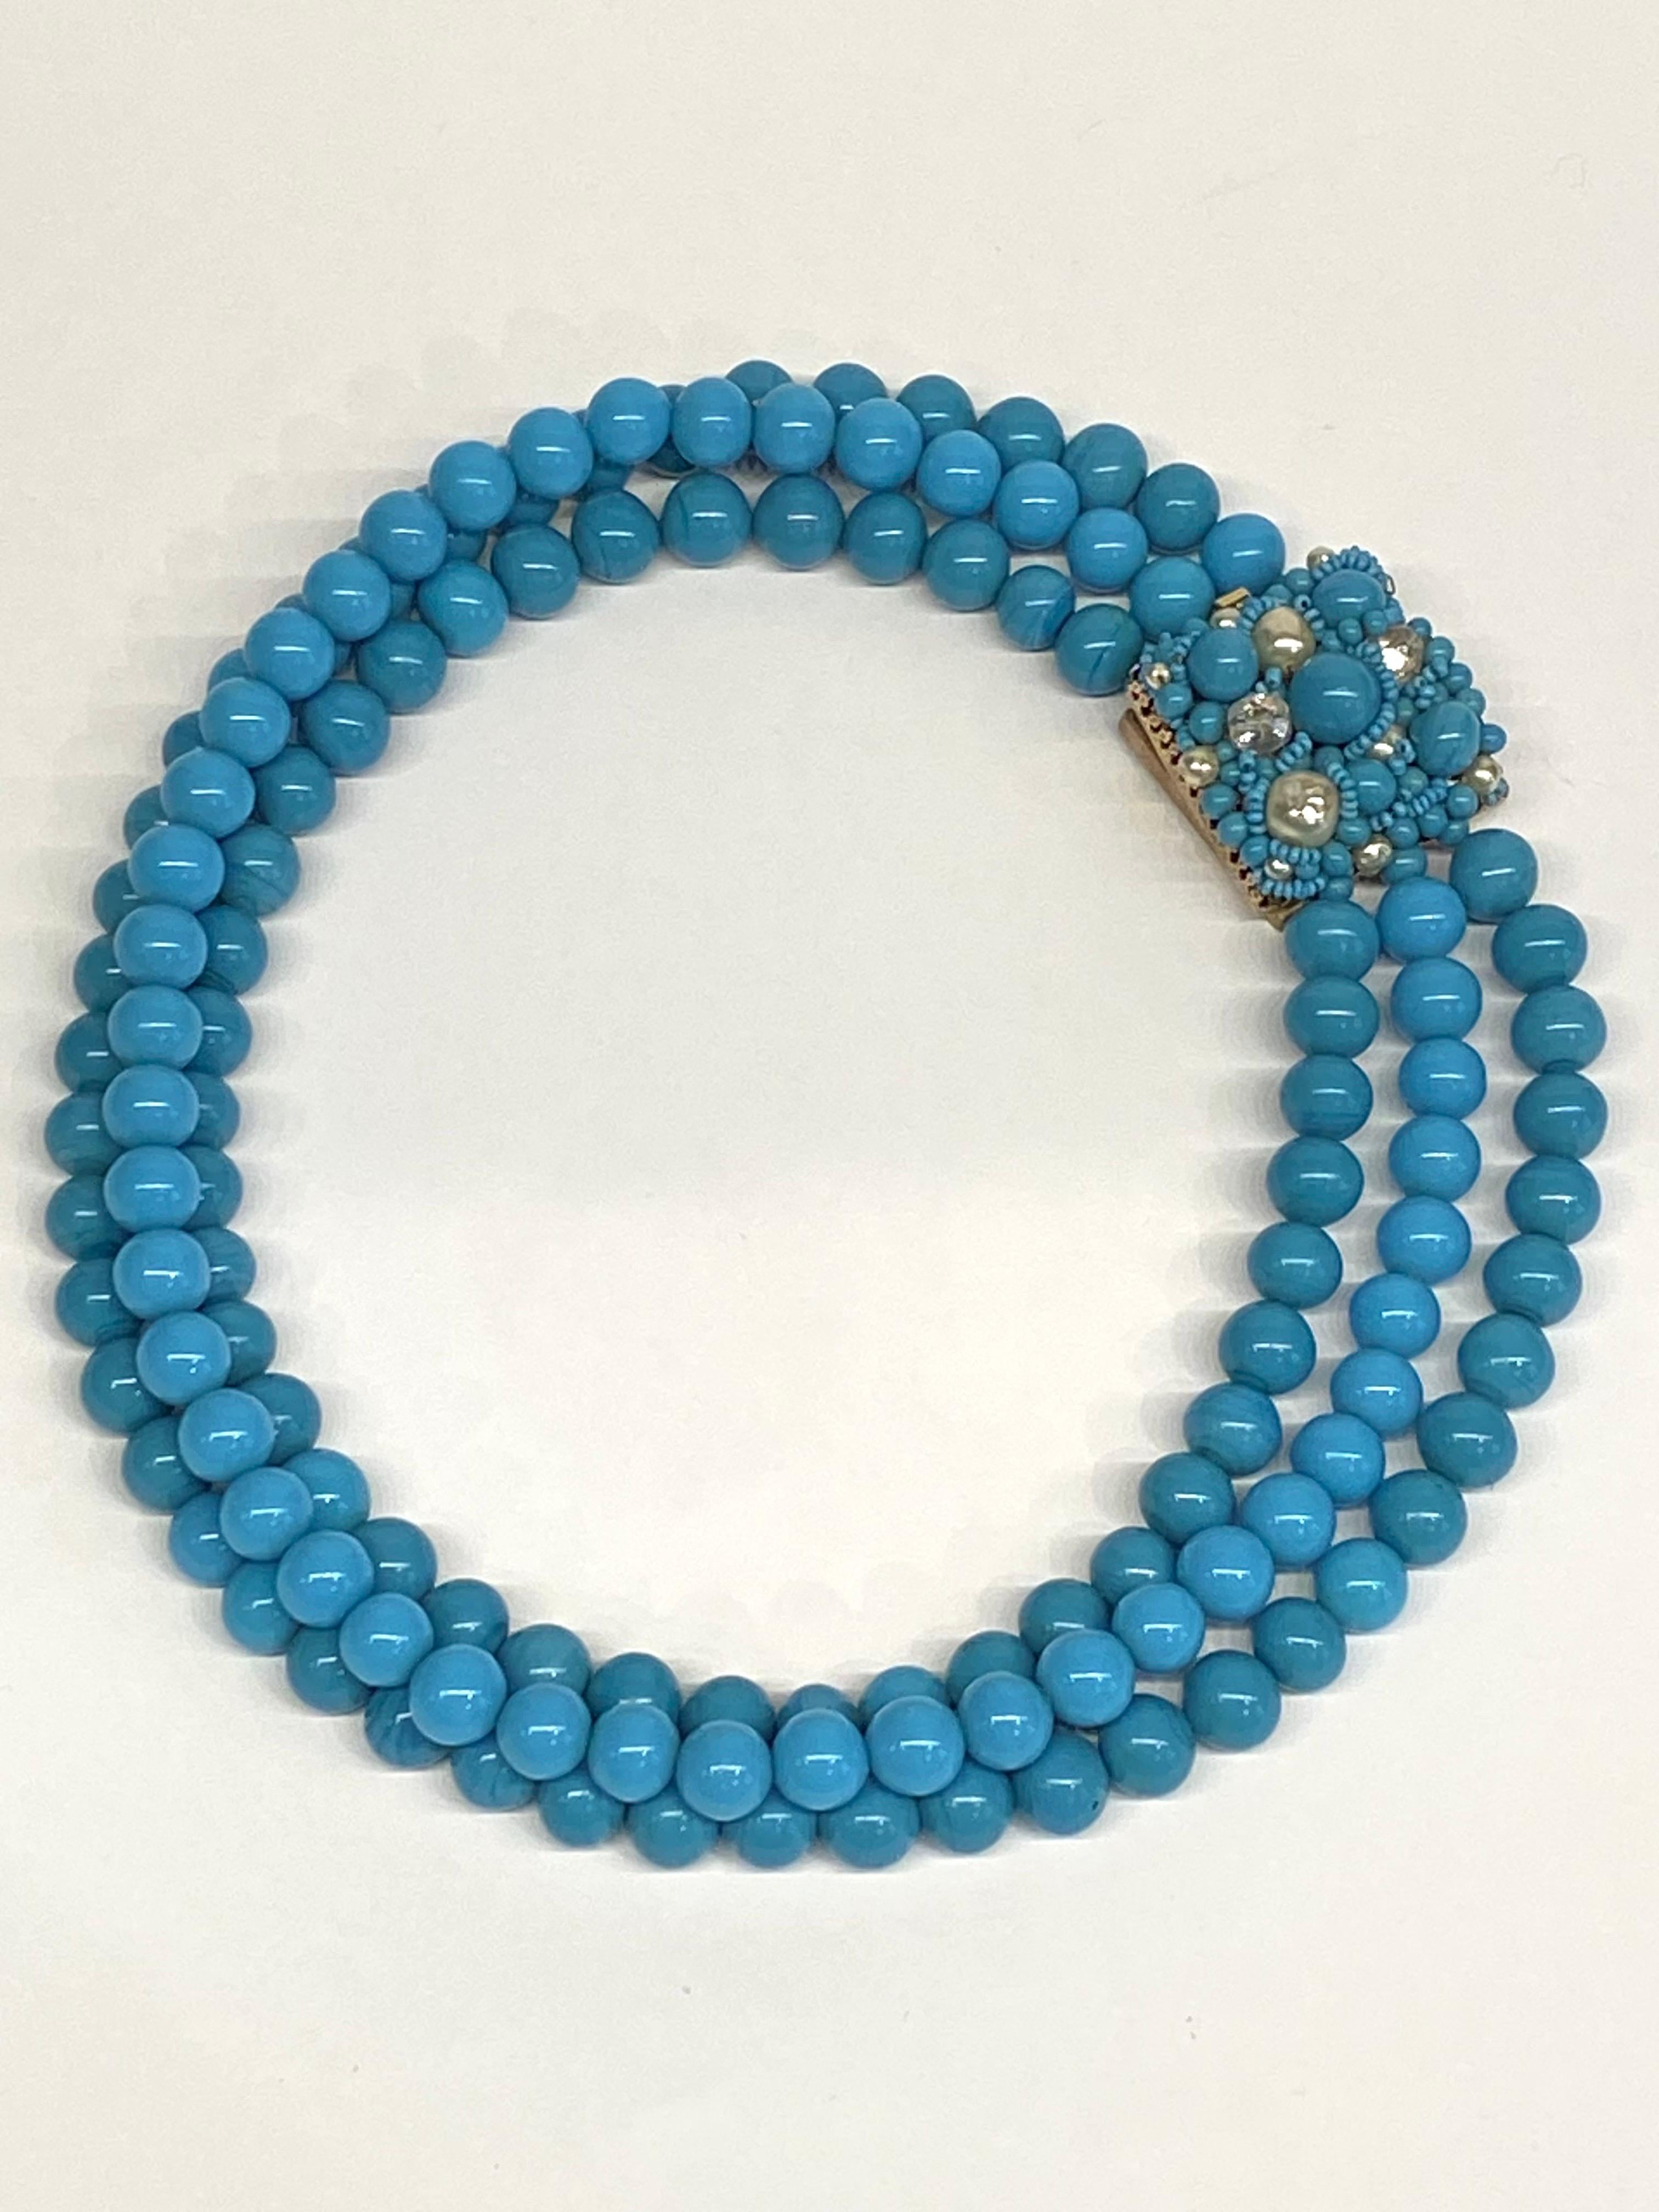 Women's or Men's Coppola e Toppo 1950s three strand turquoise glass bead necklace